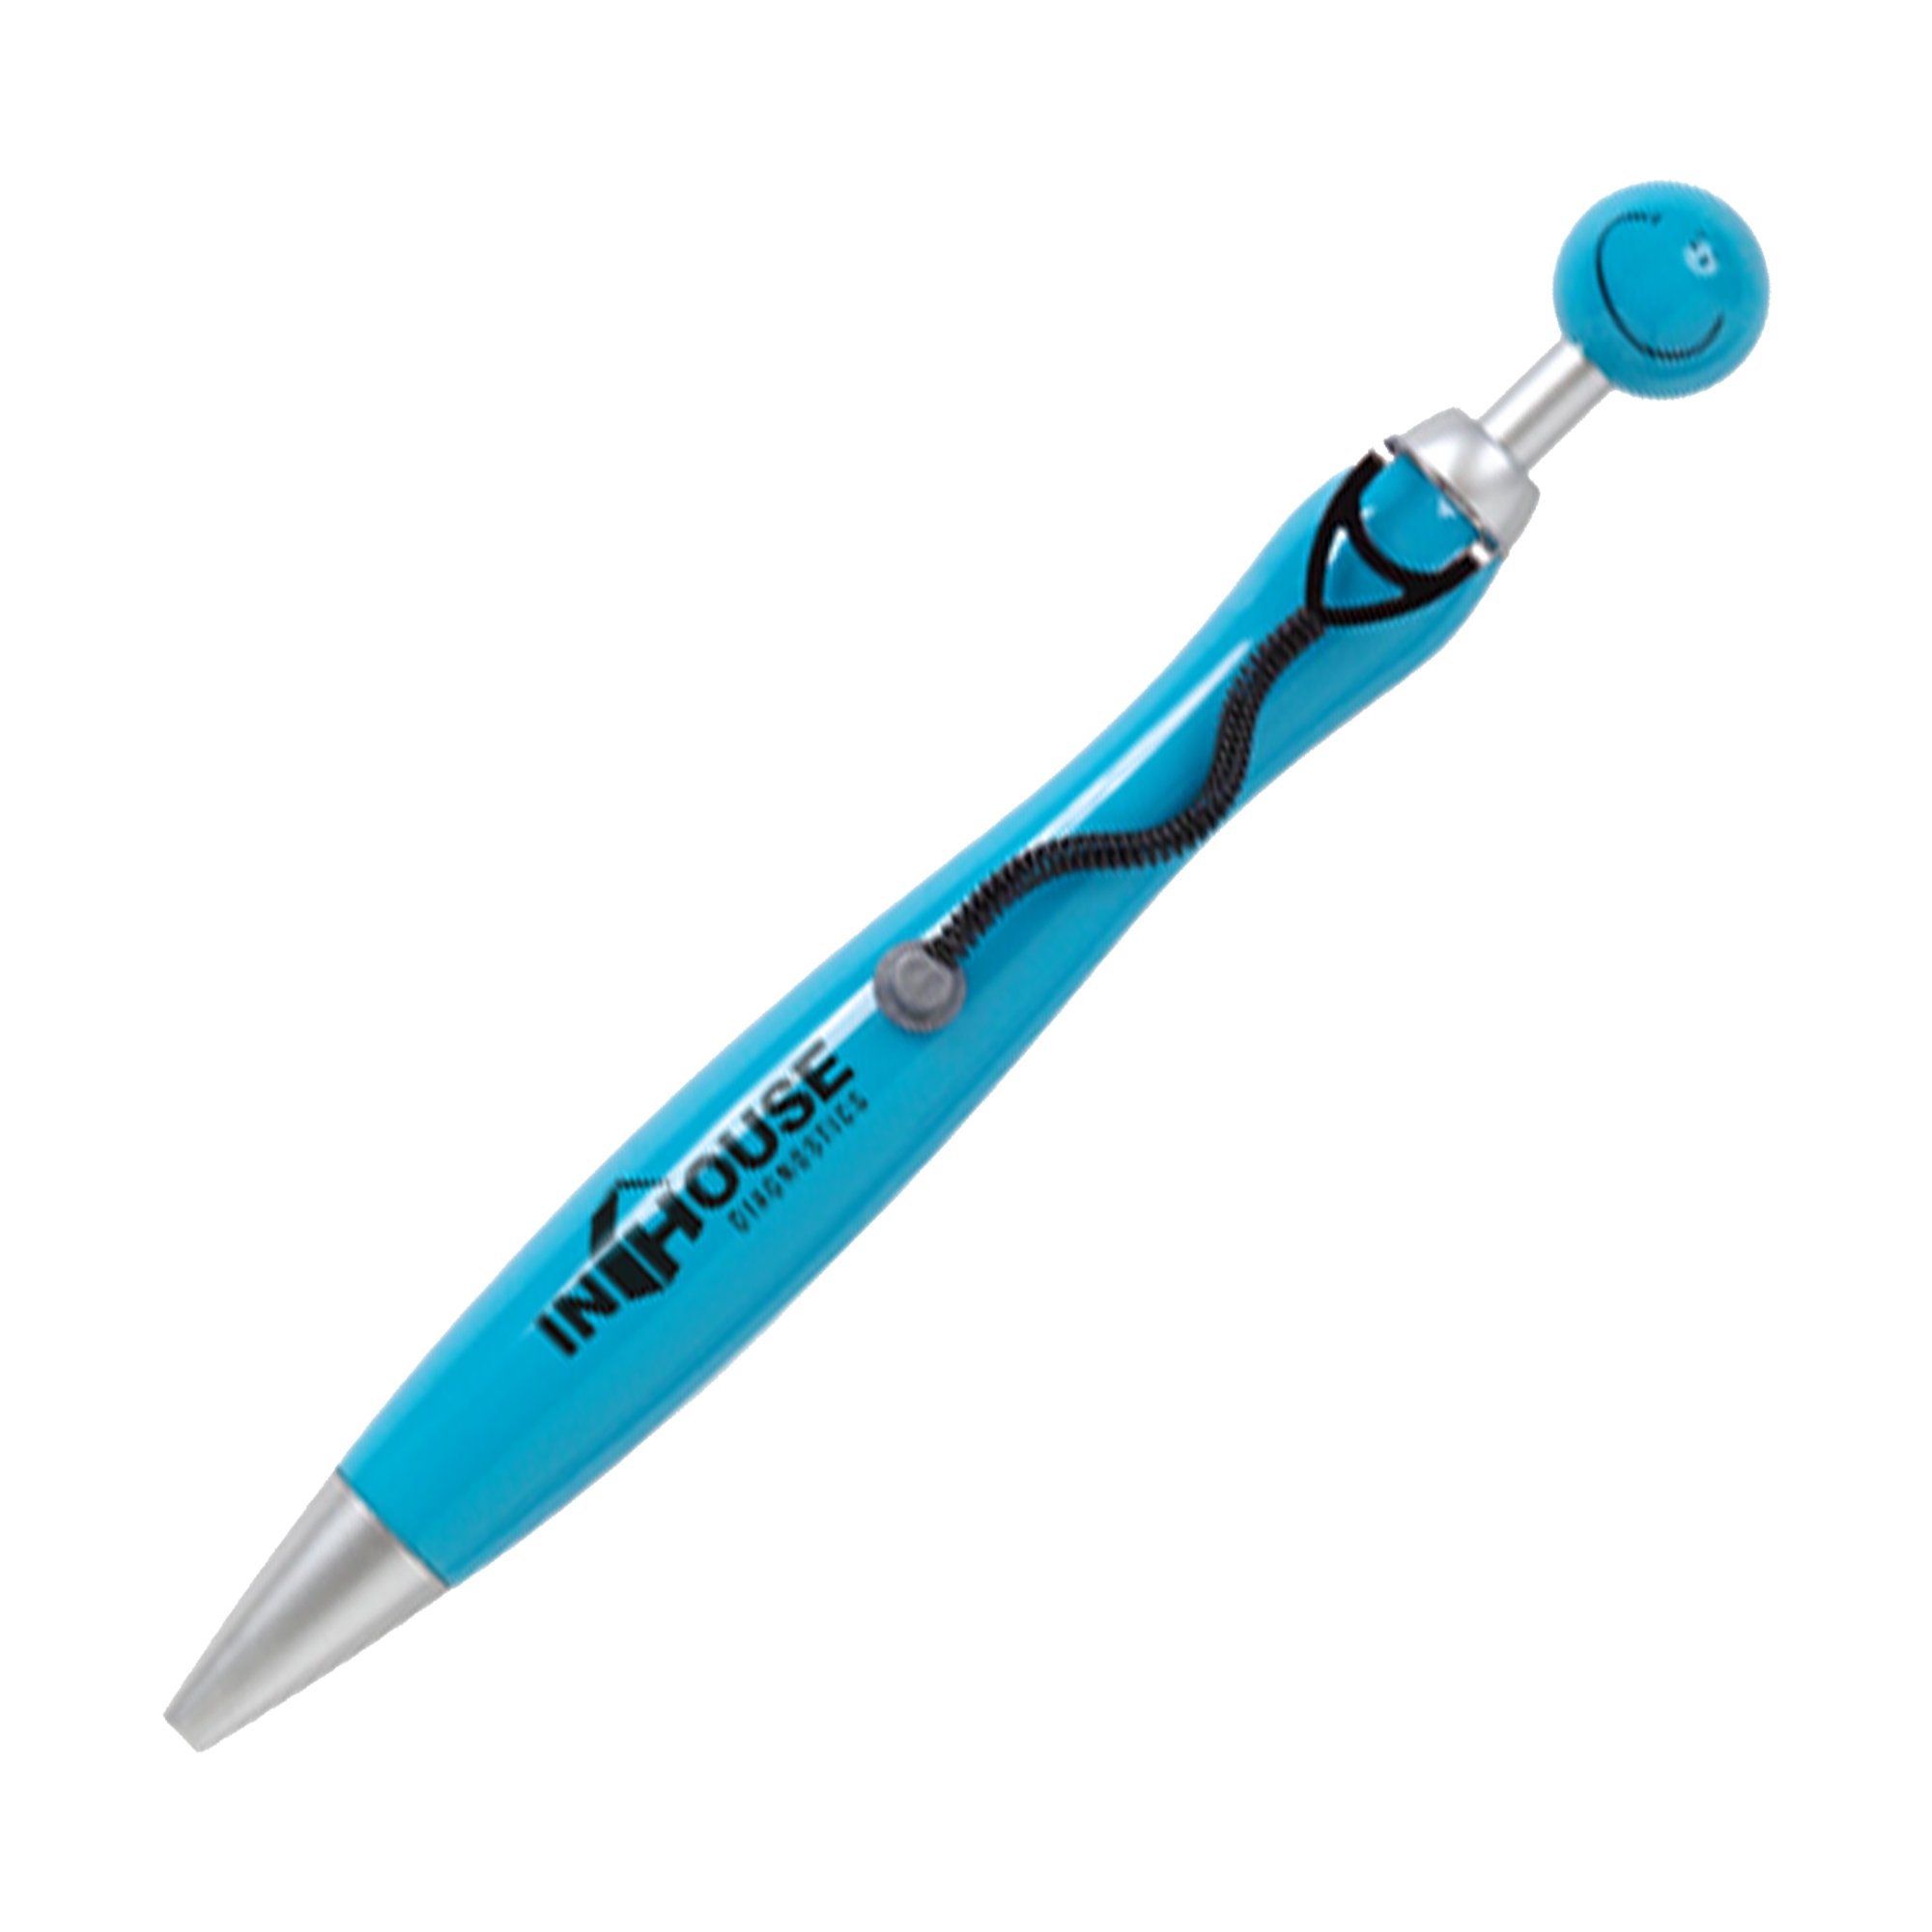 Buy promotional Swanky® Stethoscope Pen at National Pen - pens.com